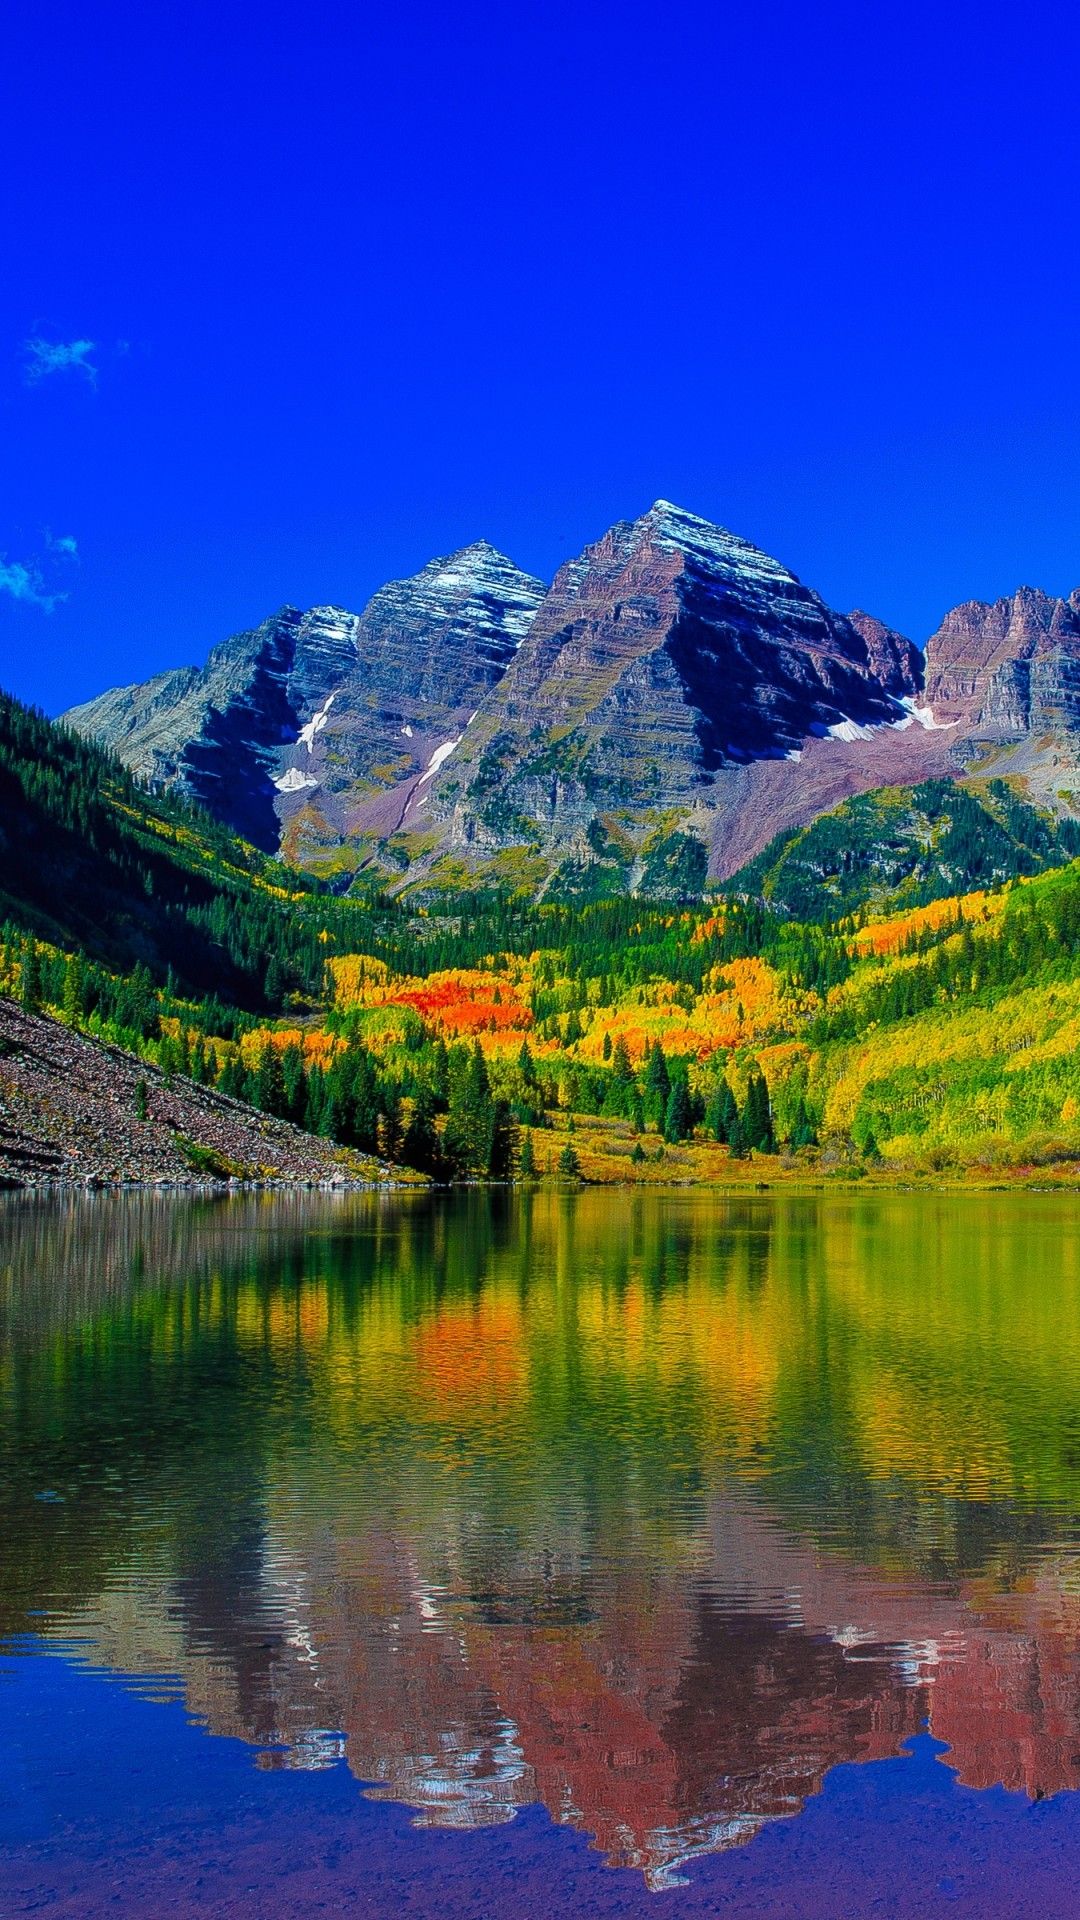 Usa, Maroon Bells, Lake, Grass, Mountain, Reflection. Colorado tourism, Maroon bells, Tourism